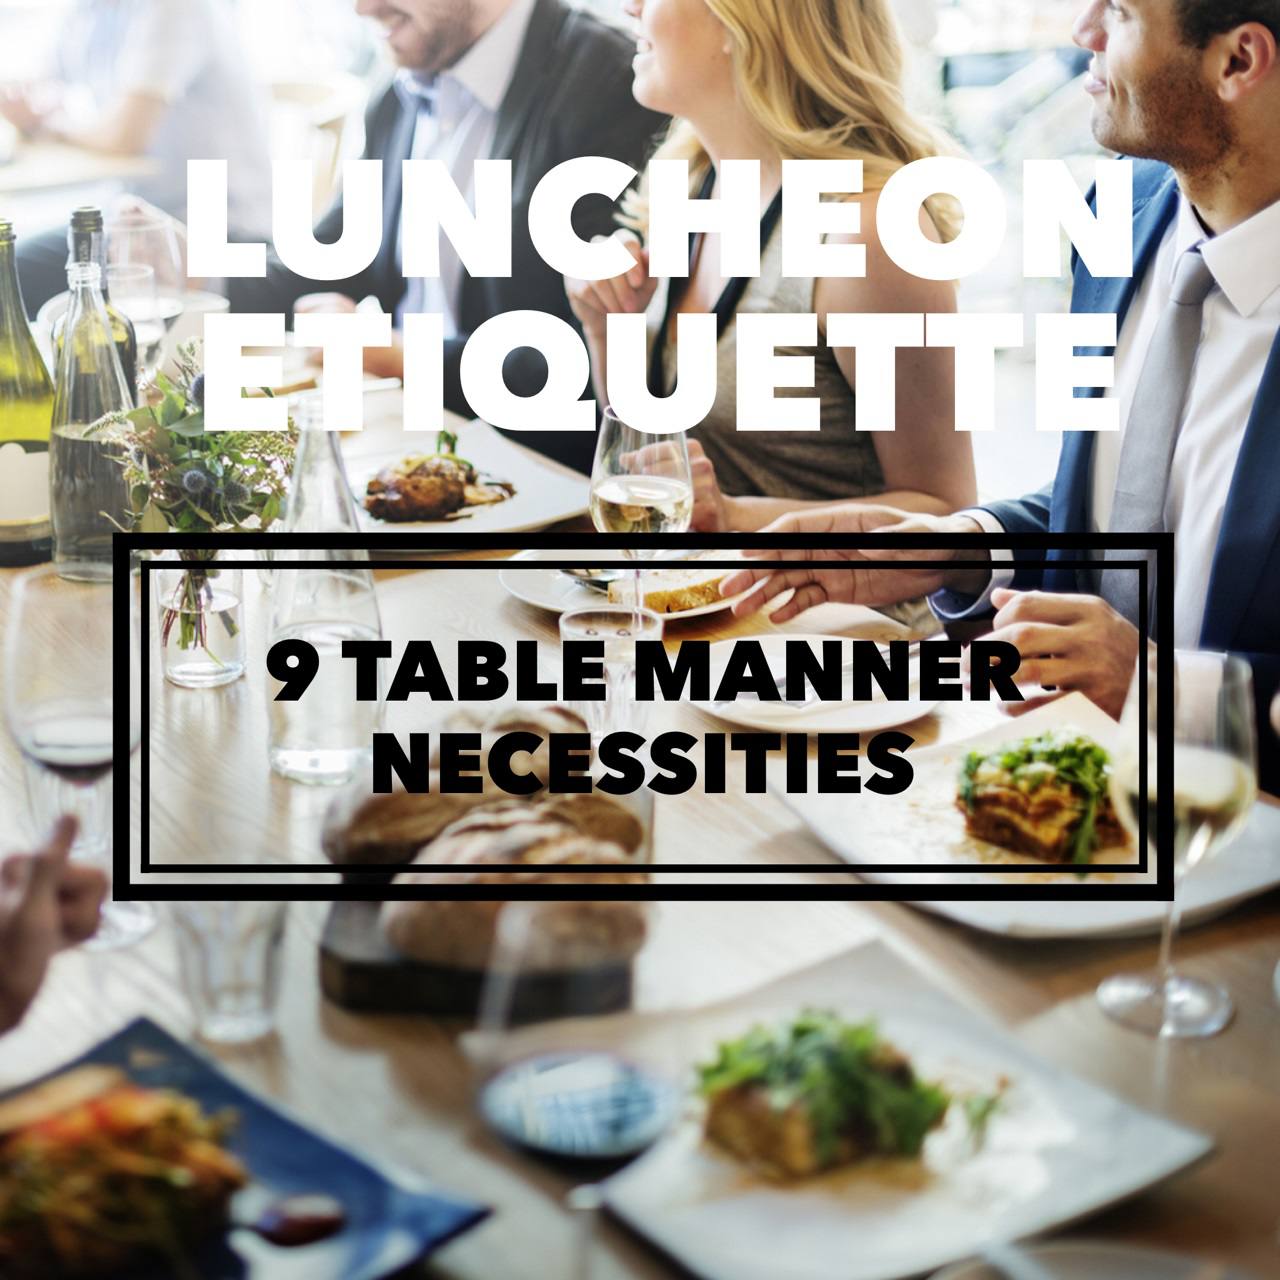 Luncheon Etiquette | 9 Table Manner Necessities